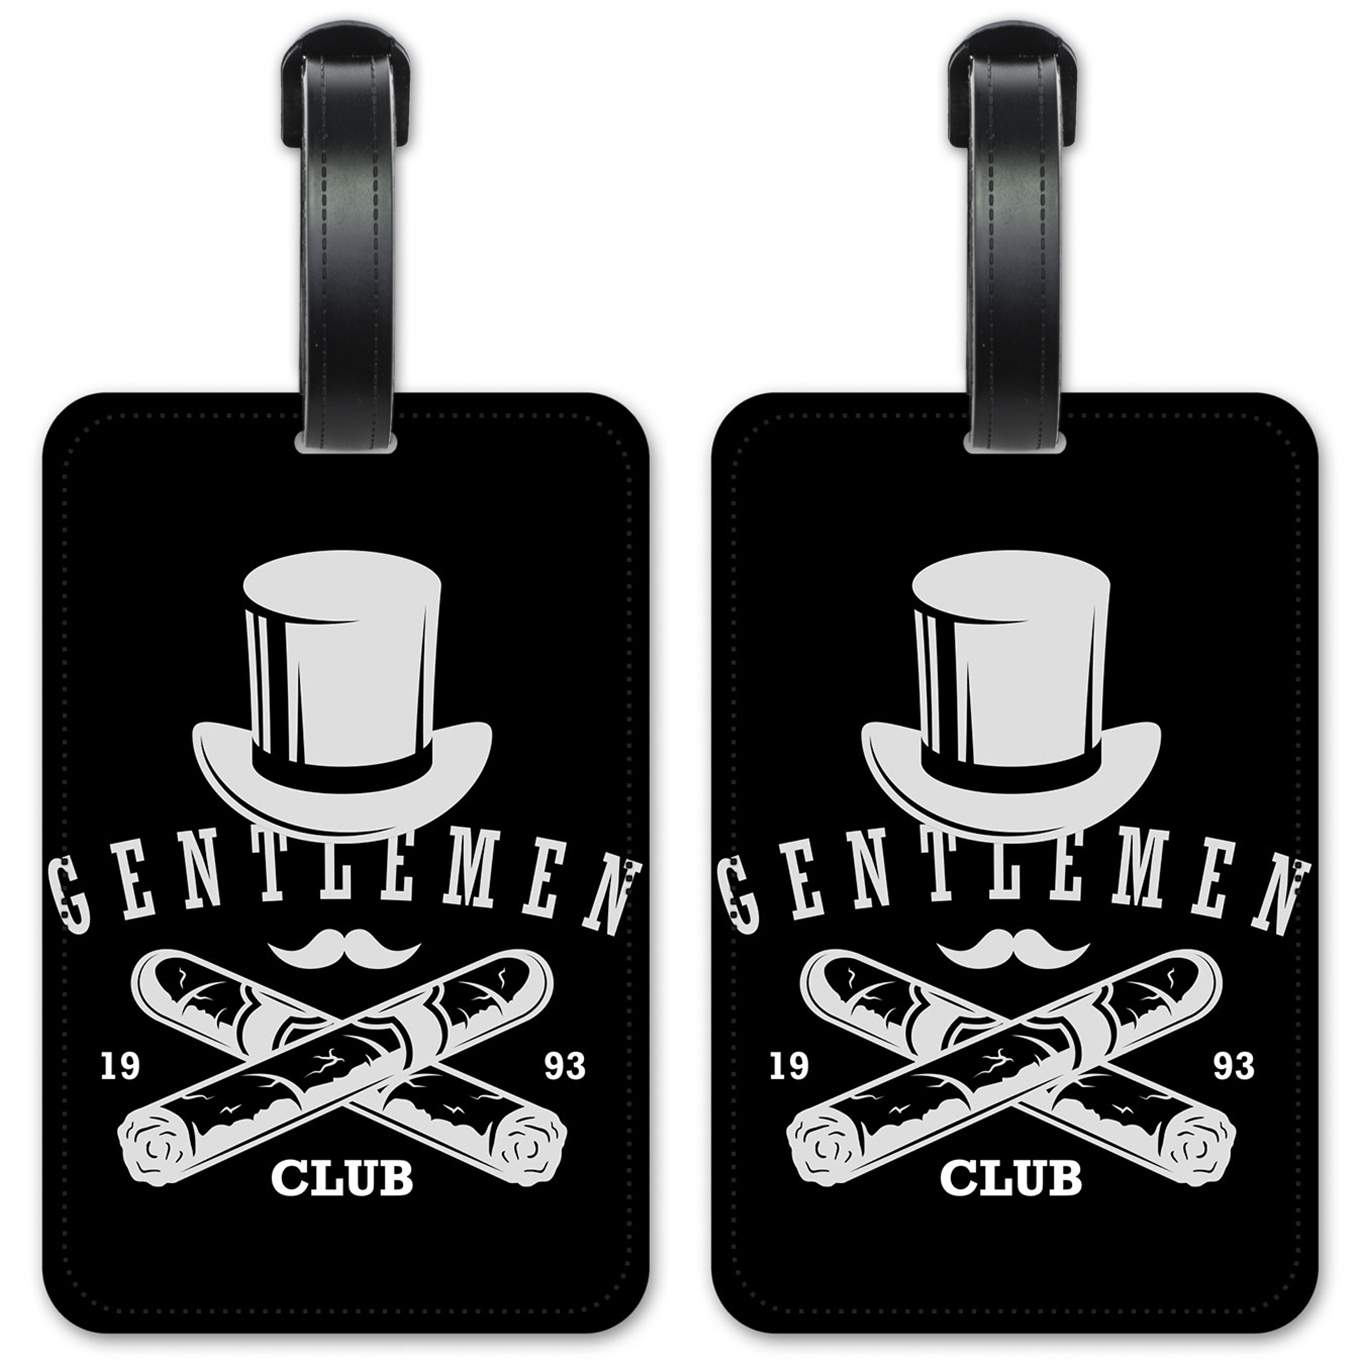 Gentleman's Club Cigars - #3000